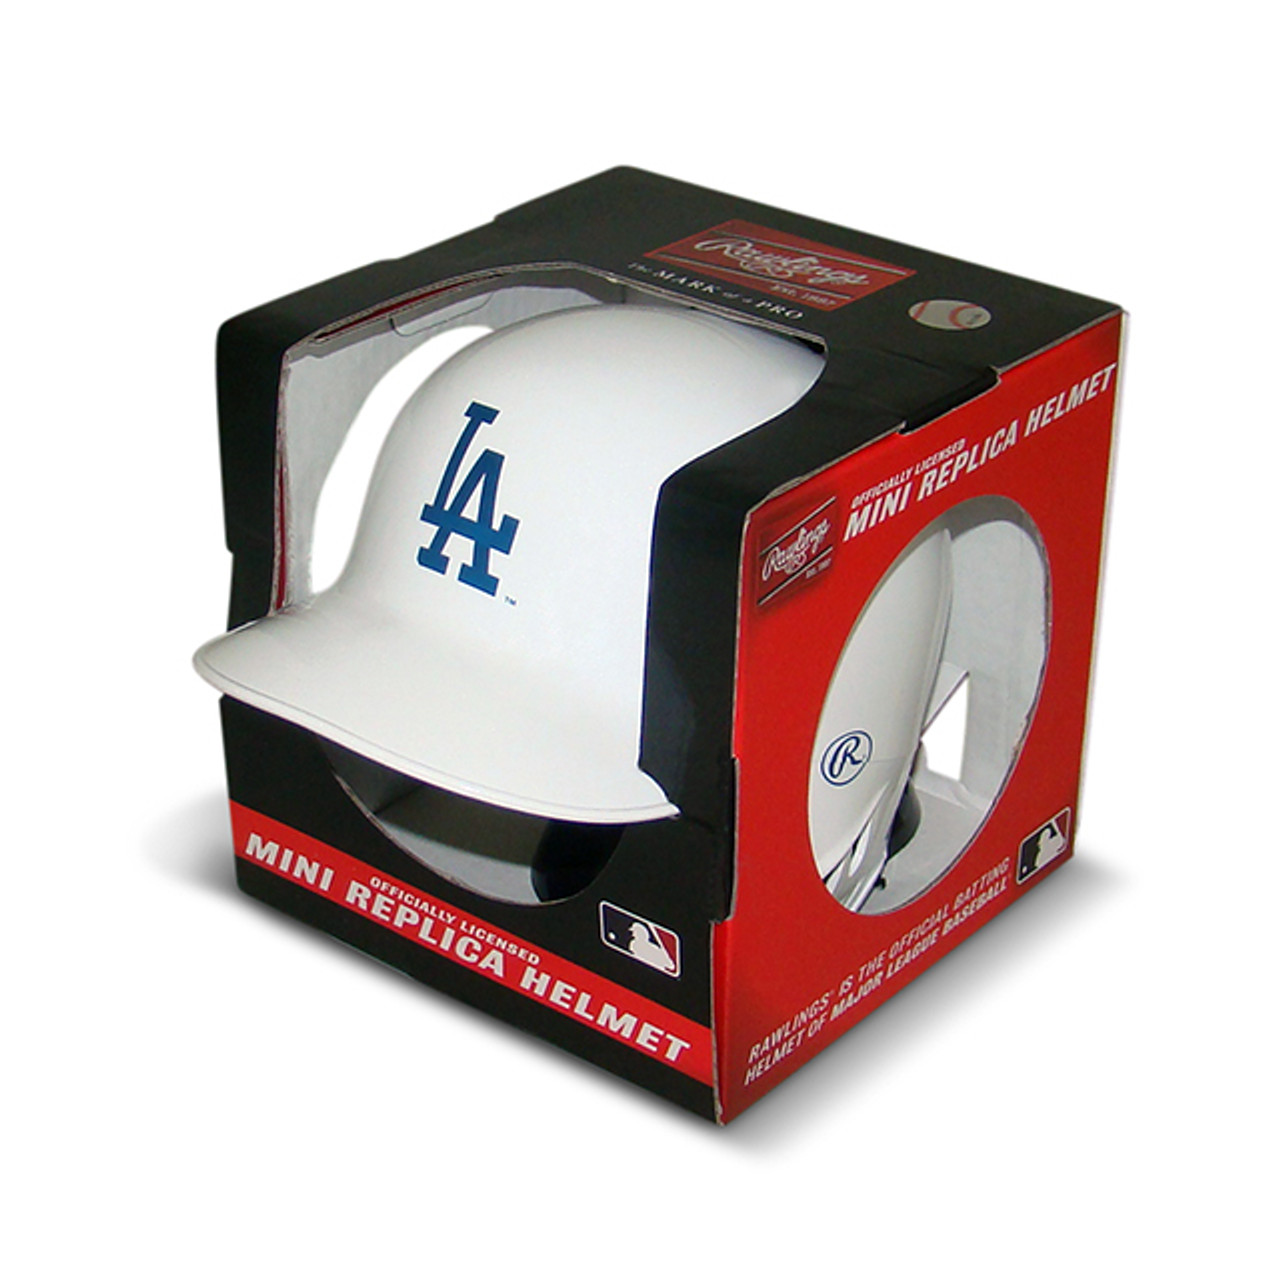 Los Angeles Dodgers 10-Inch Team Logo Glove